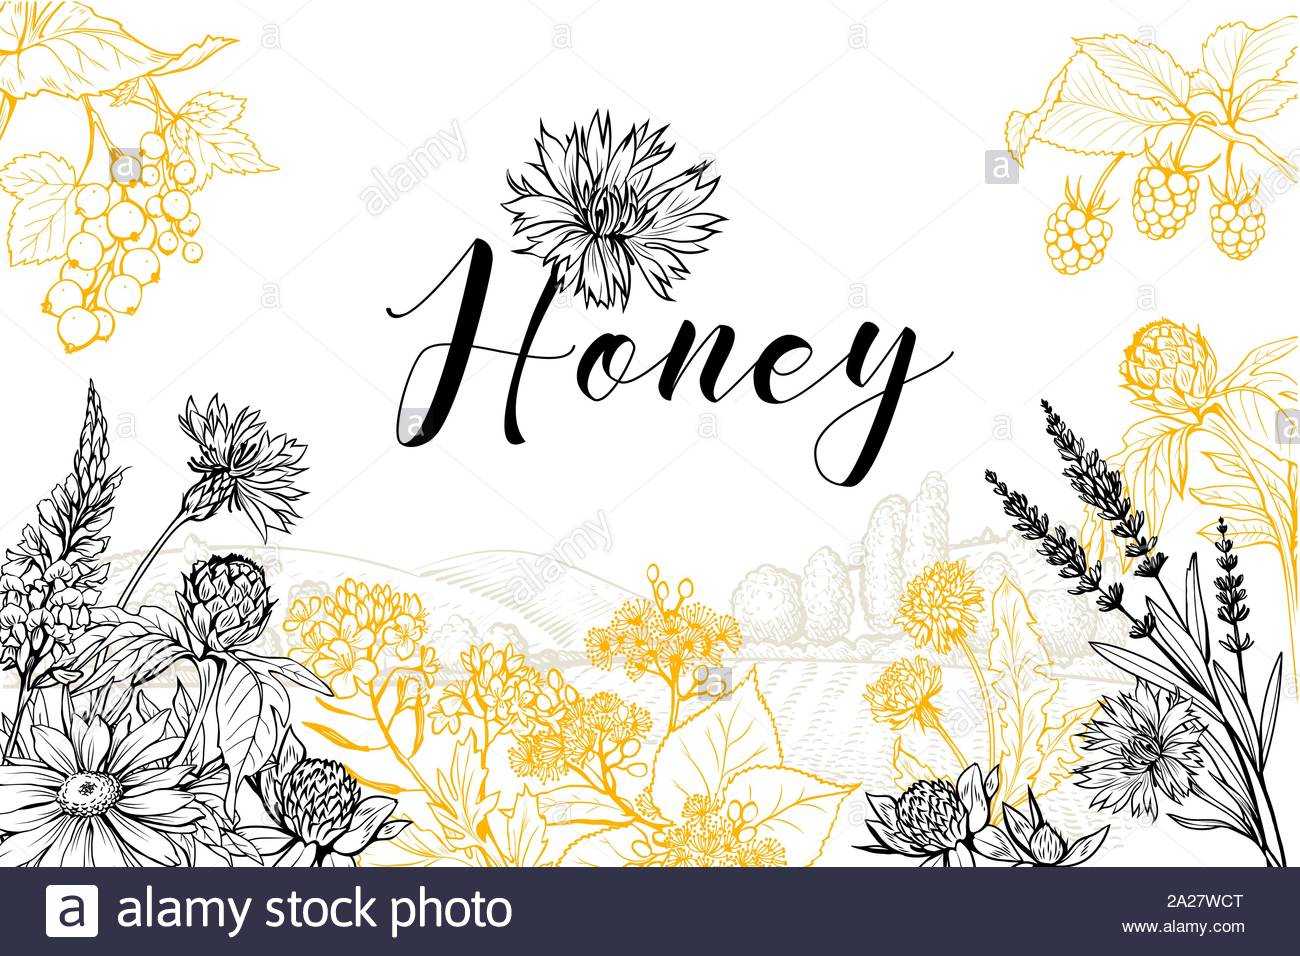 Flower Honey Vector Hand Drawn Banner Template. Natural Intended For Homemade Banner Template